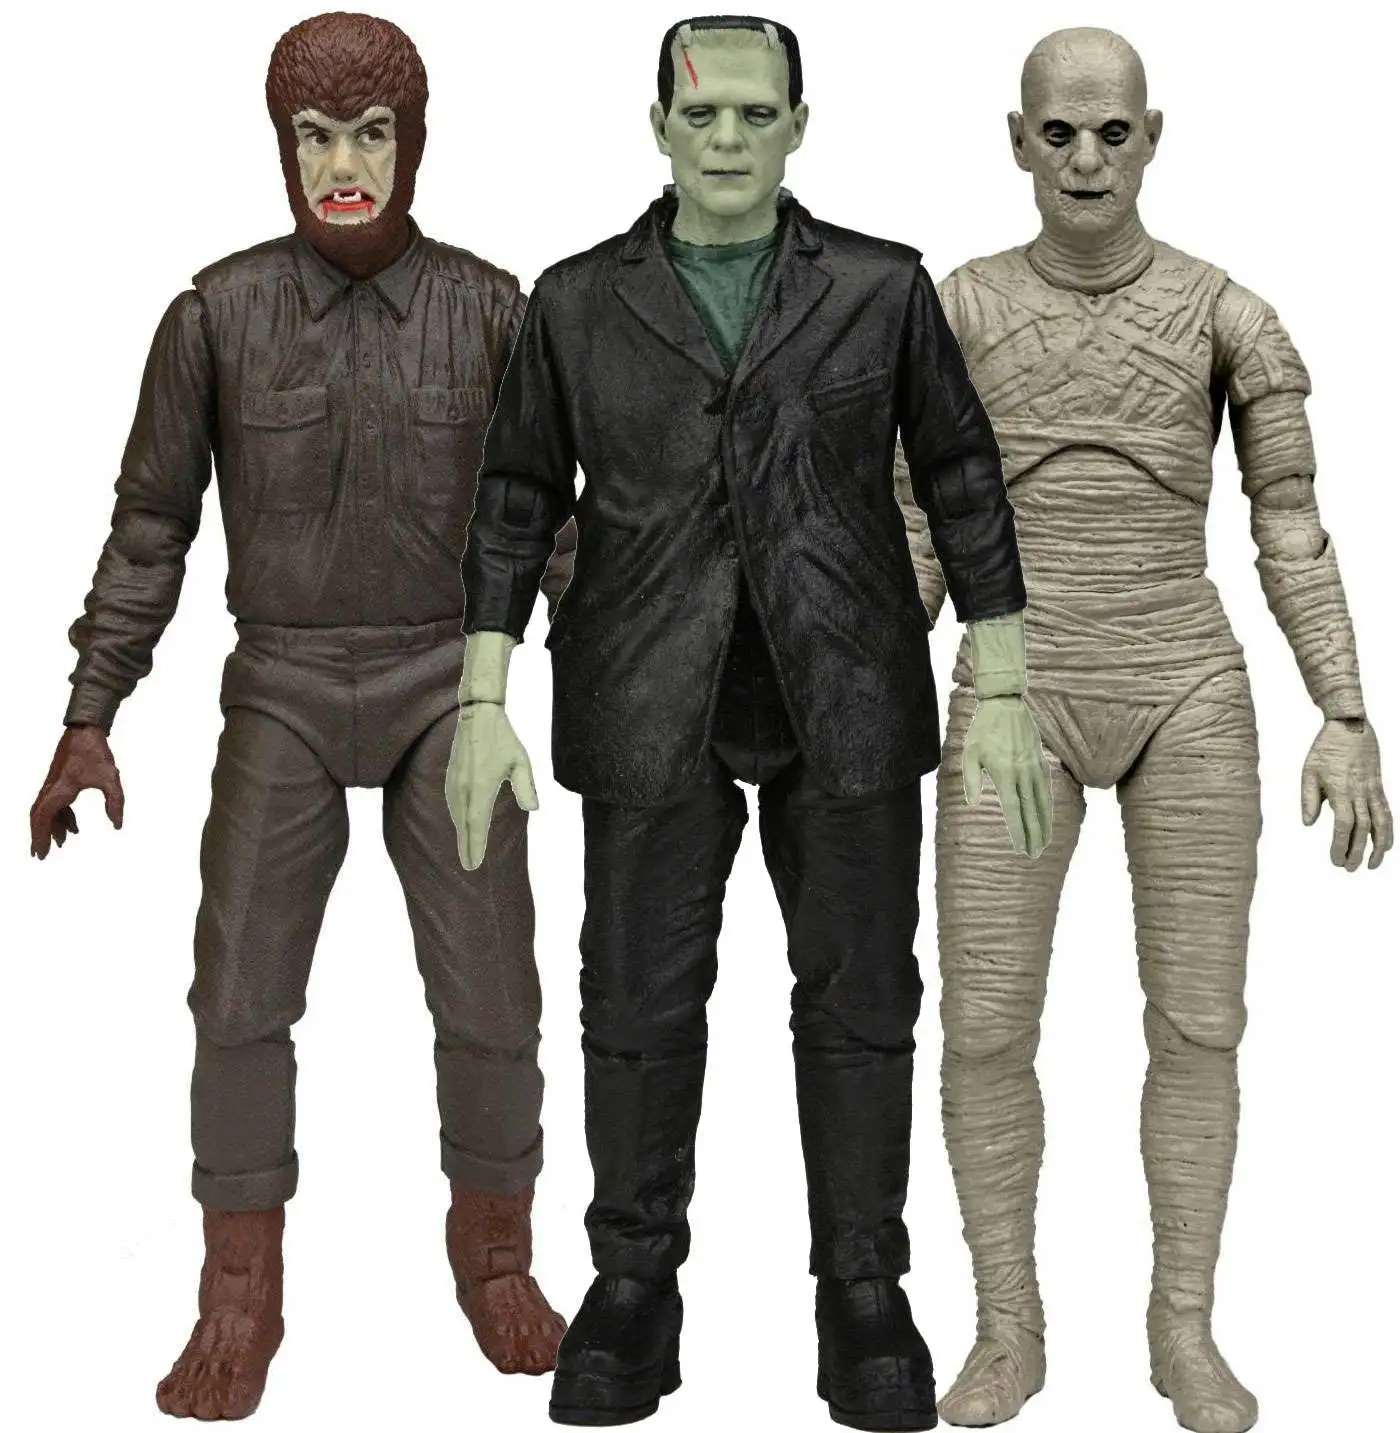 NECA Universal Monsters Mummy, Wolf Man & Frankenstein's Monster Set of 3 Action Figures [Retro Glow-in-the-Dark] (Pre-Order ships October)